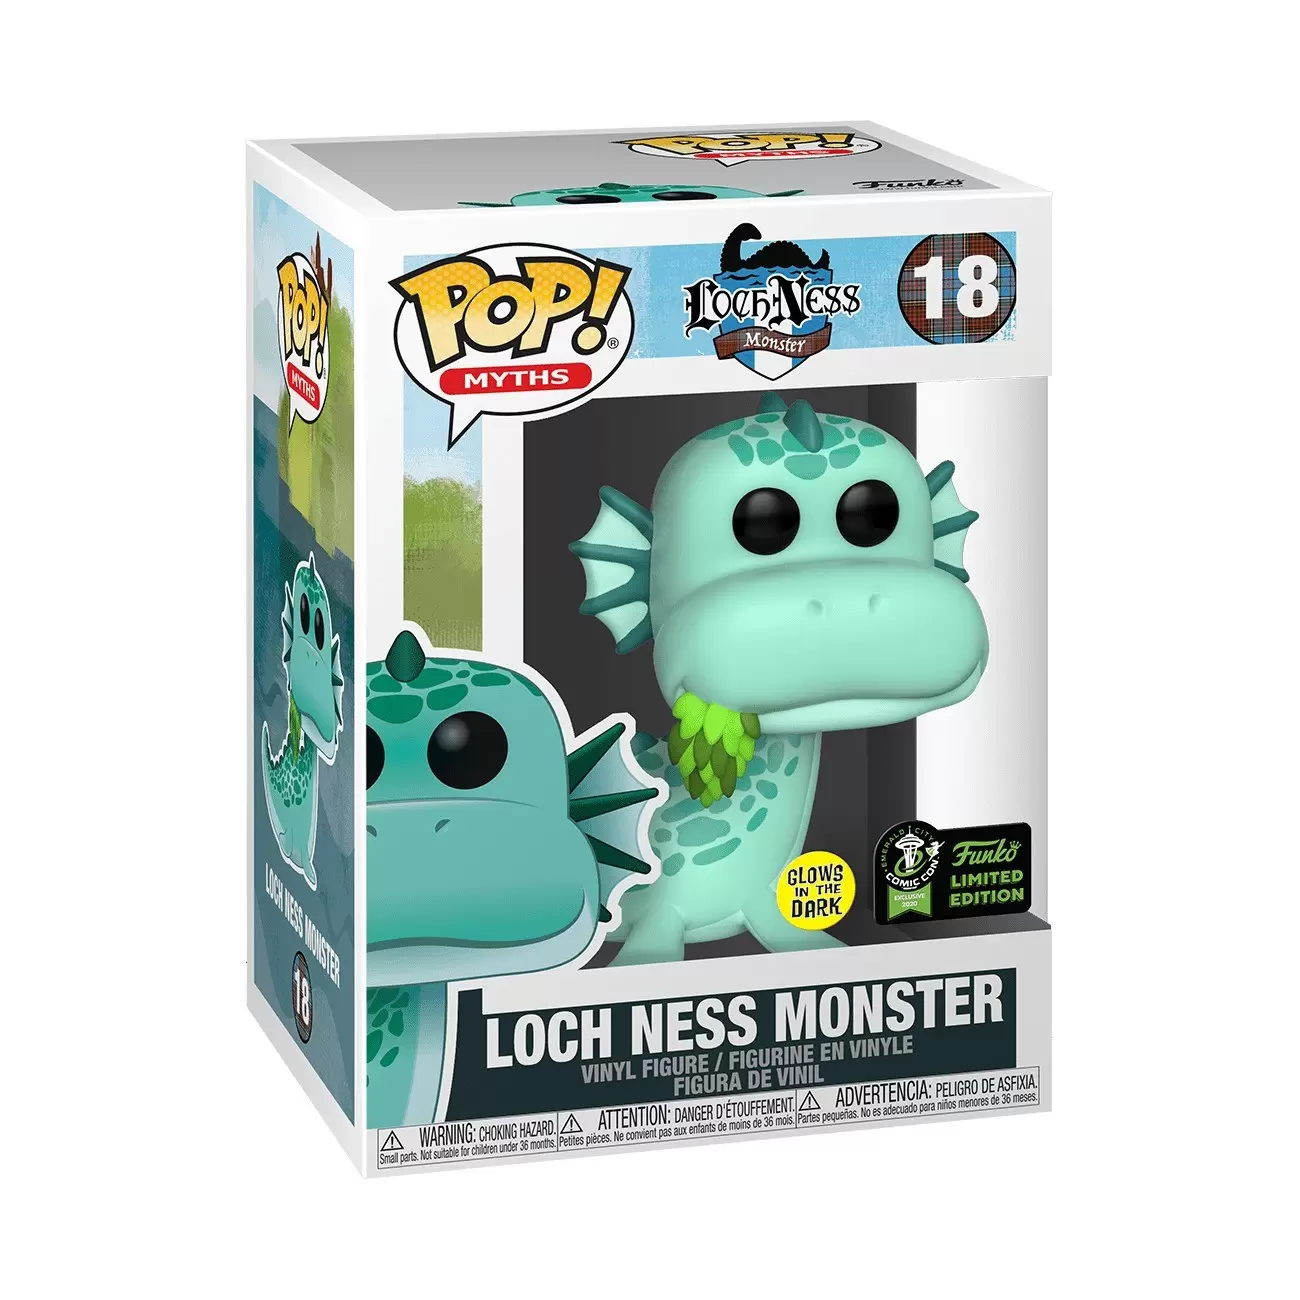 POP! Myths - Loch Ness Monster GITD